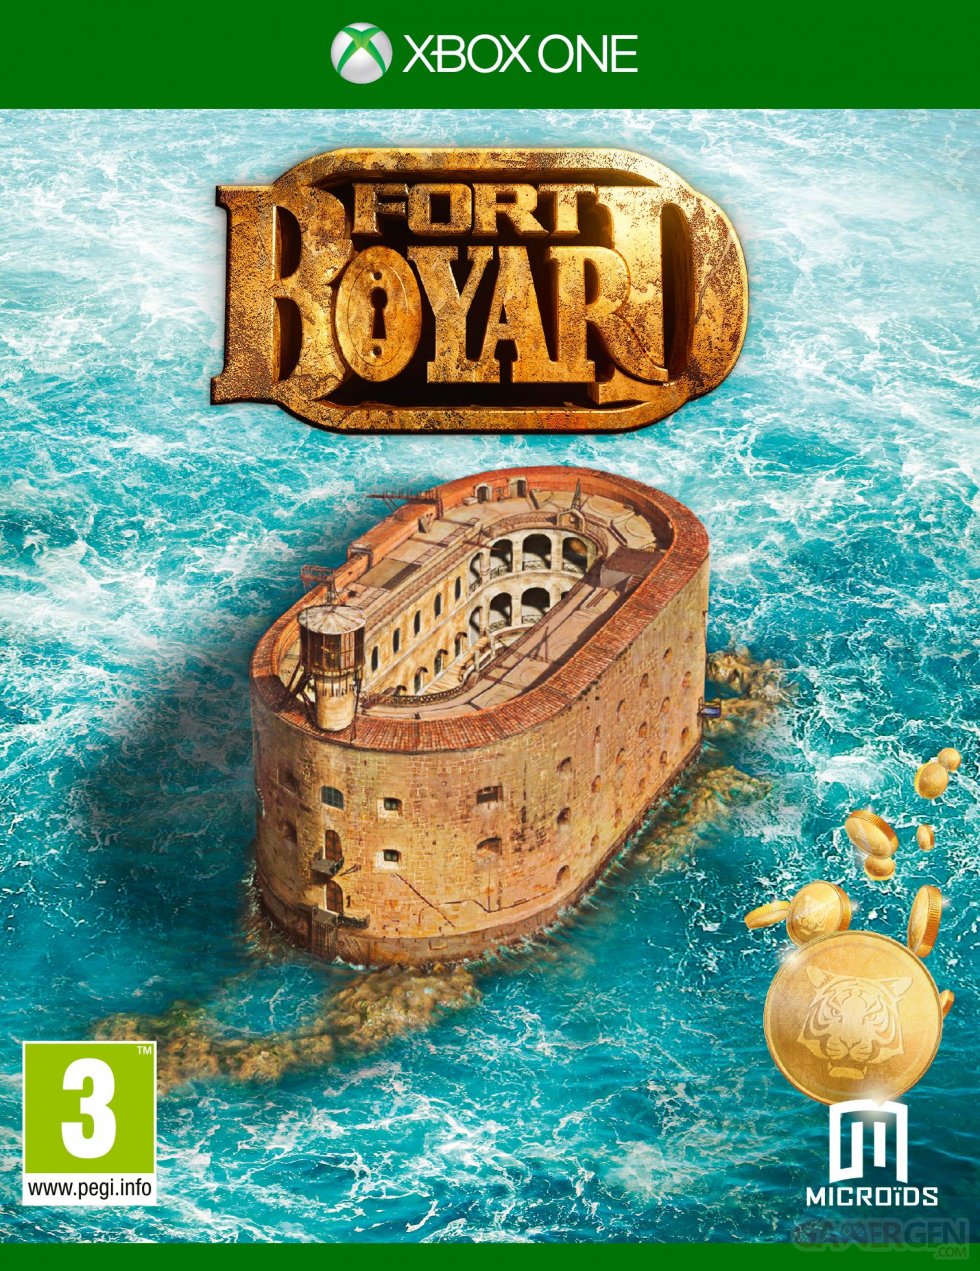 Fort Boyard 17_06_2019 (50)